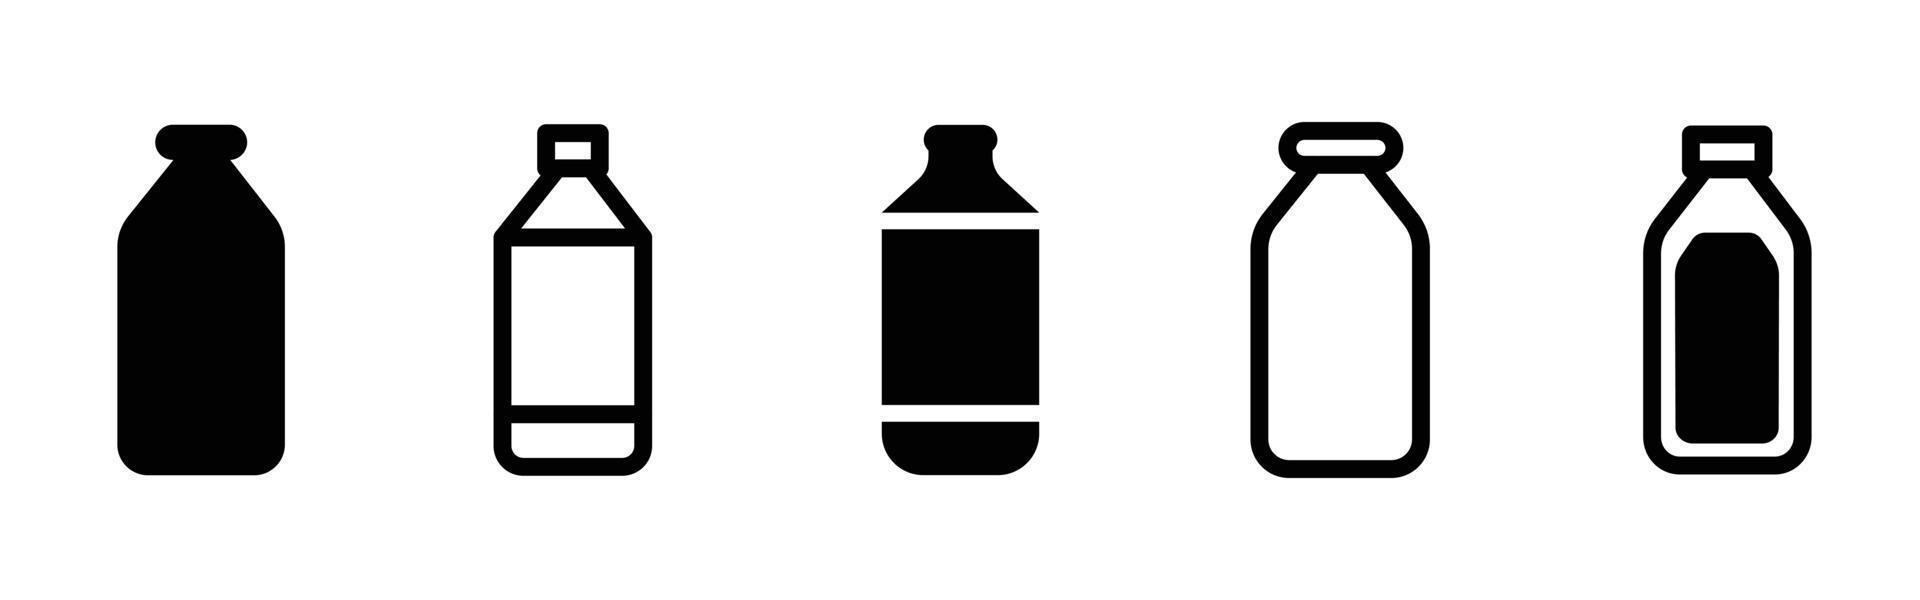 Set of simple bottle icon design vector